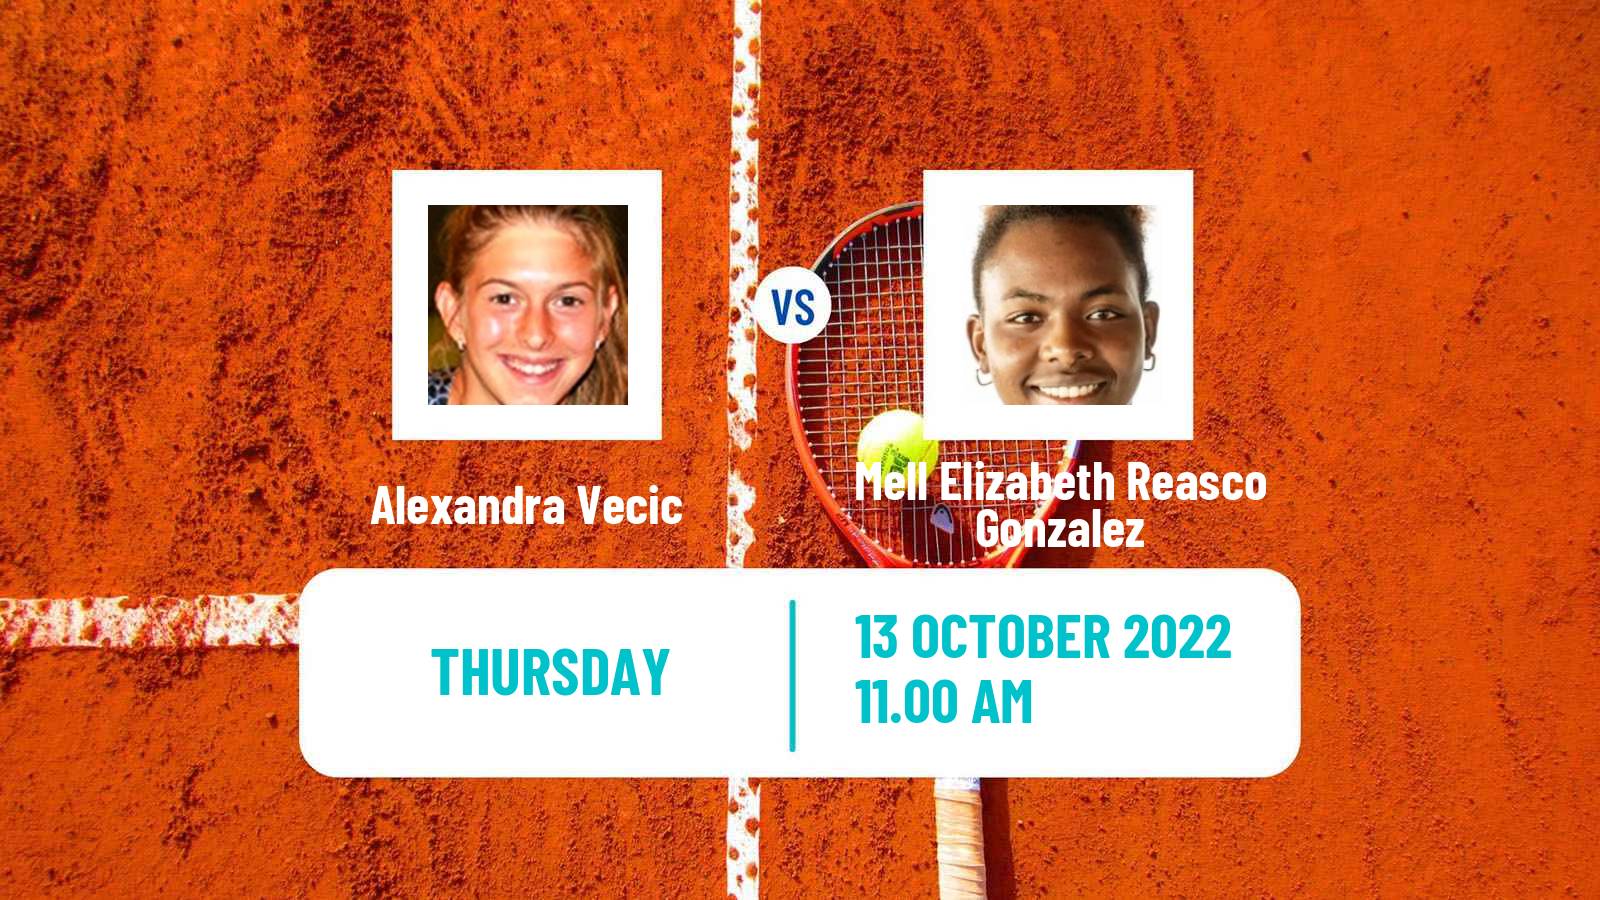 Tennis ITF Tournaments Alexandra Vecic - Mell Elizabeth Reasco Gonzalez